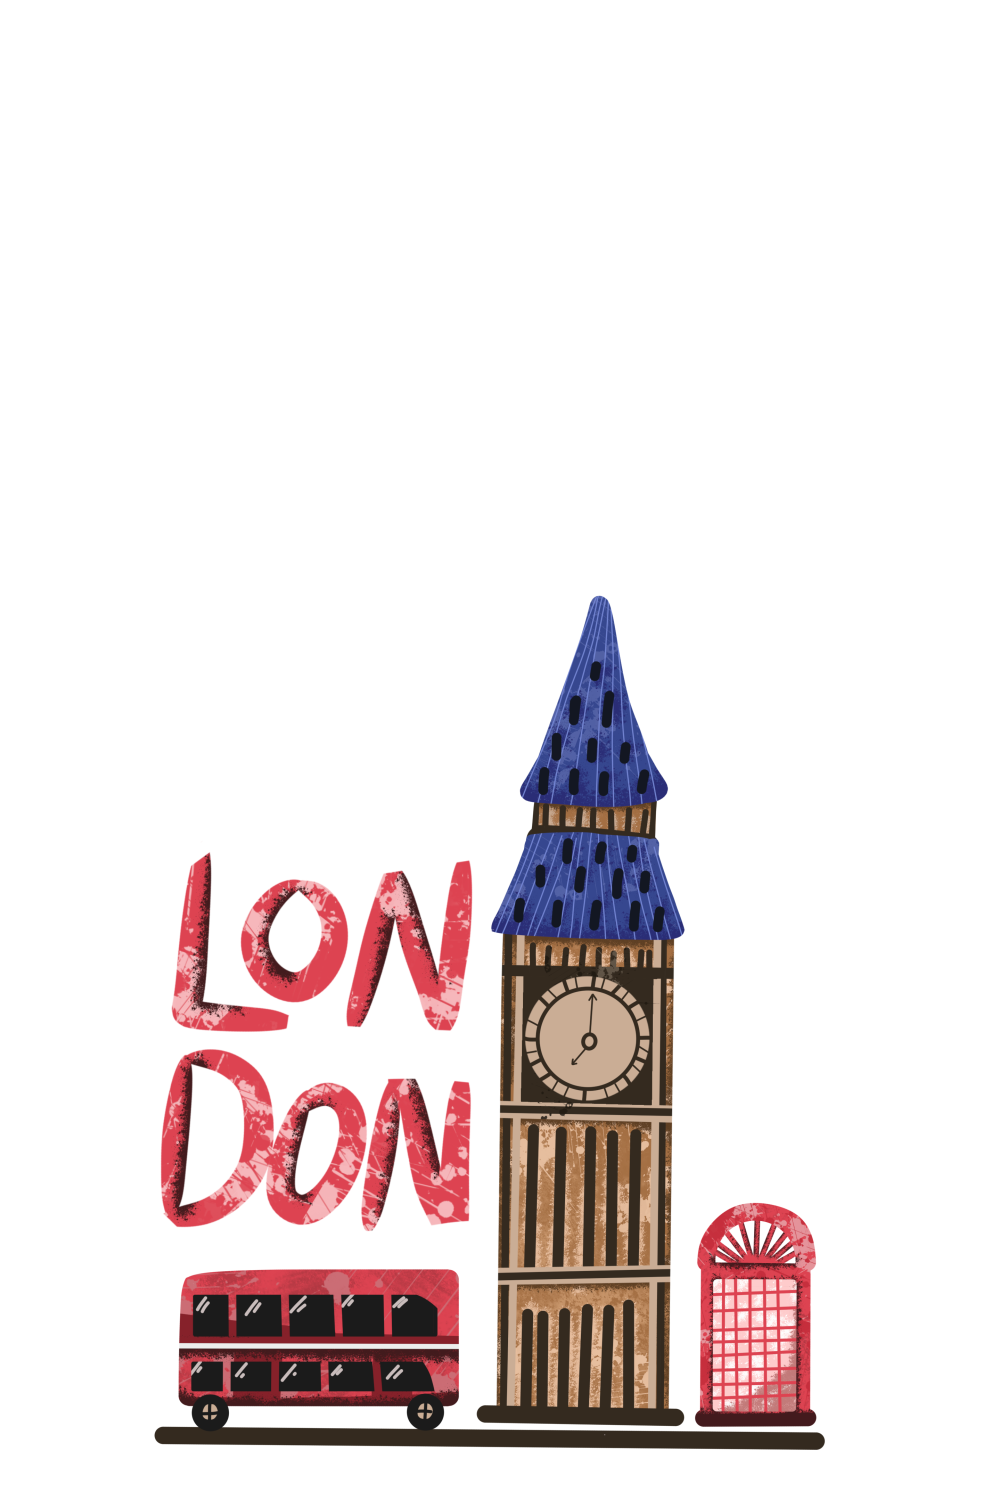 London Landmark Illustrations pinterest image.